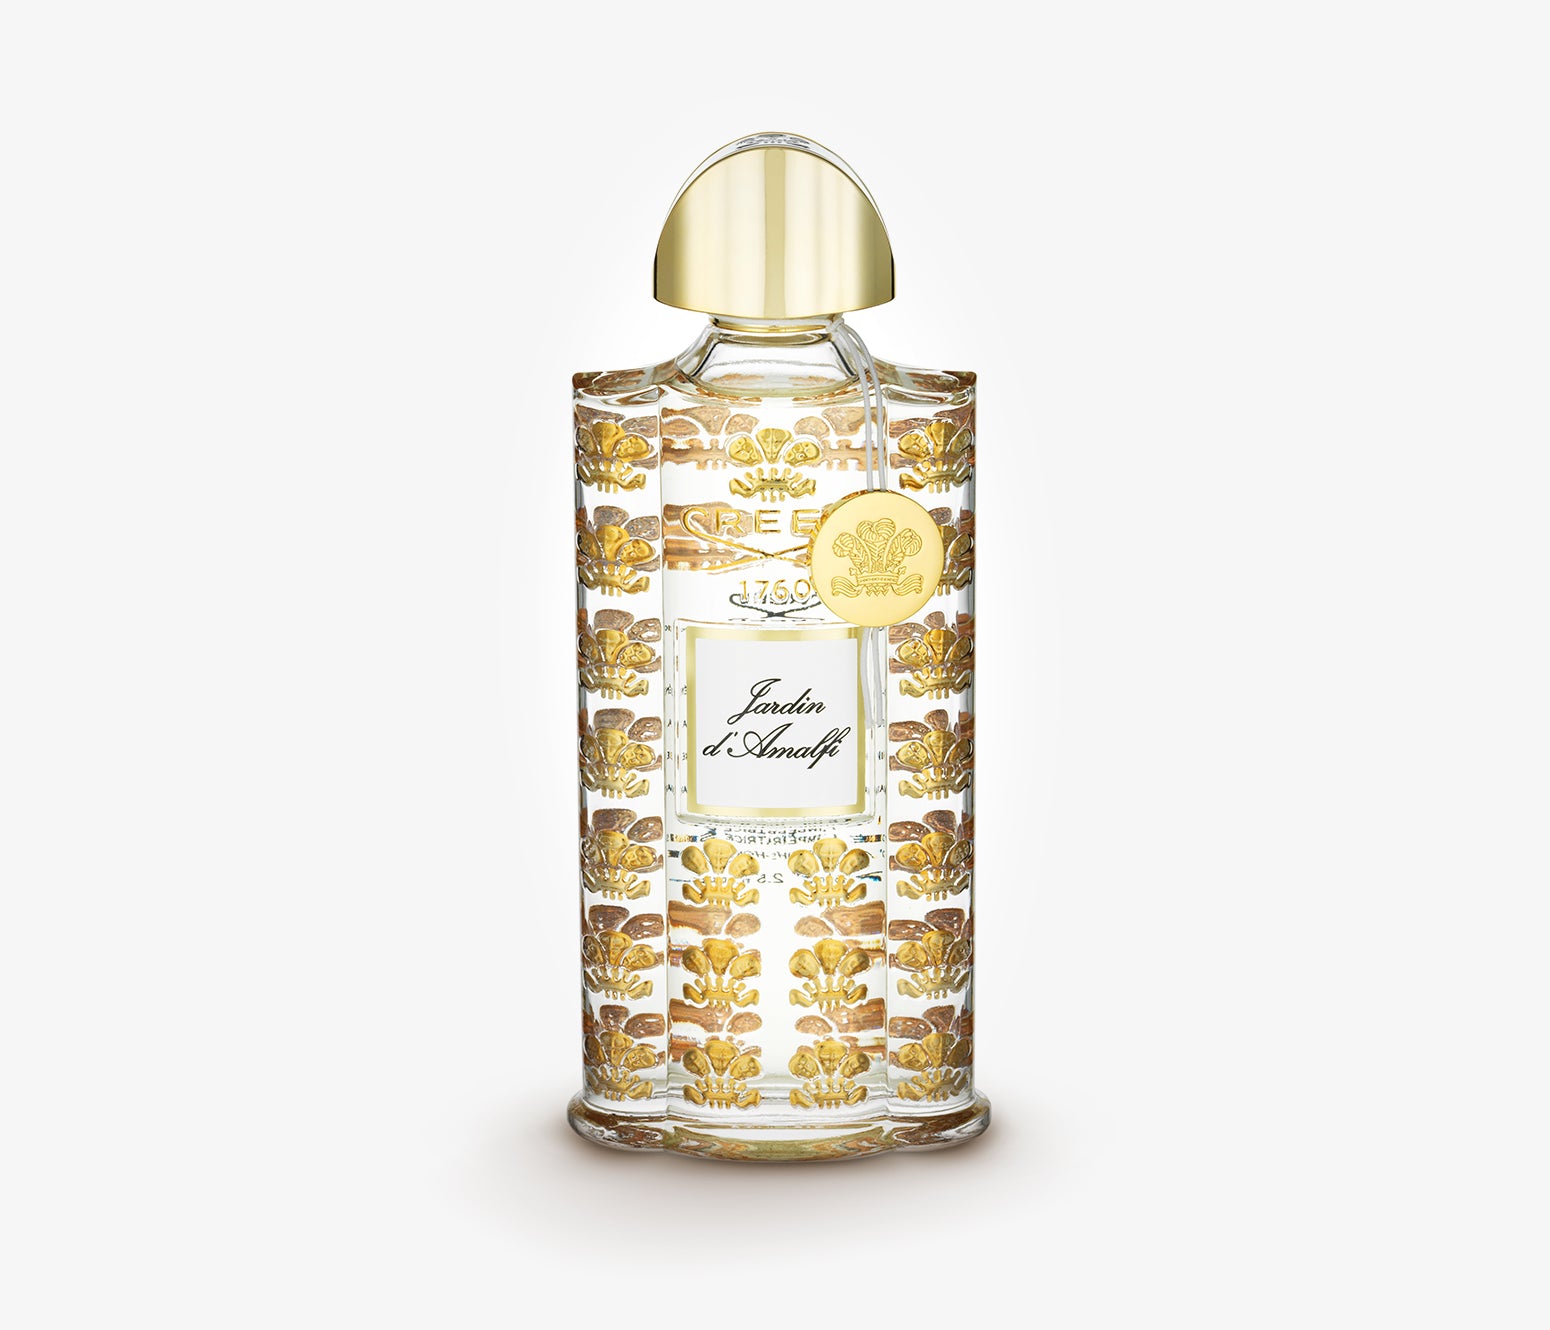 Creed - Royal Exclusives Jardin d'Amalfi - 75ml - DQD001 - Product Image - Fragrance - Les Senteurs